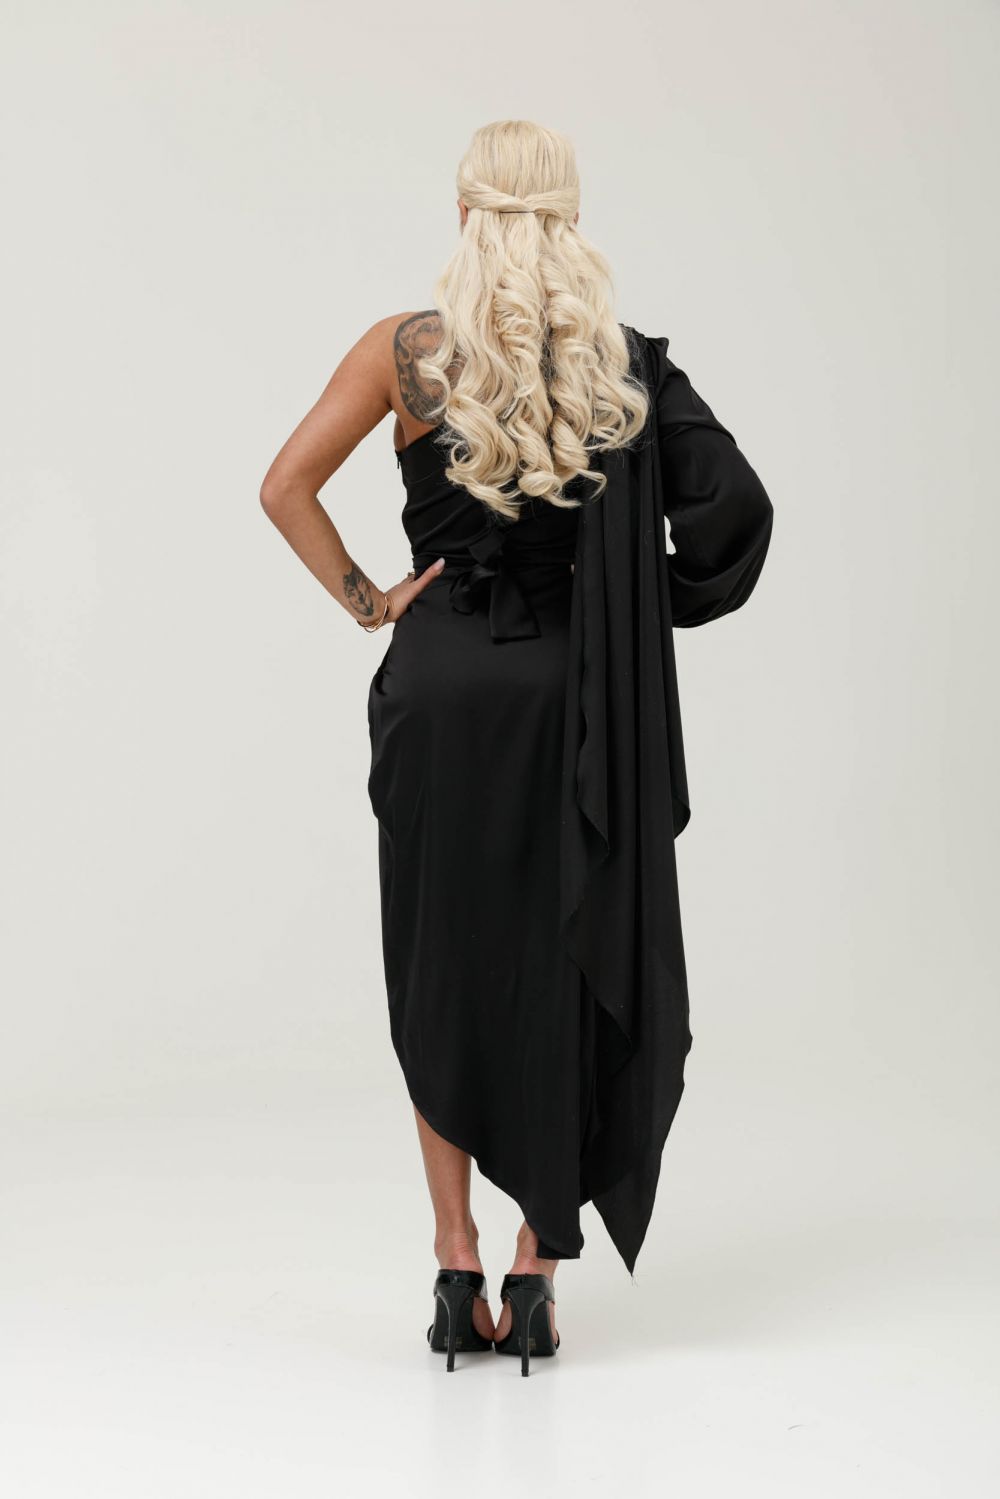 Long black satin veil dress for women by Standy Bogas